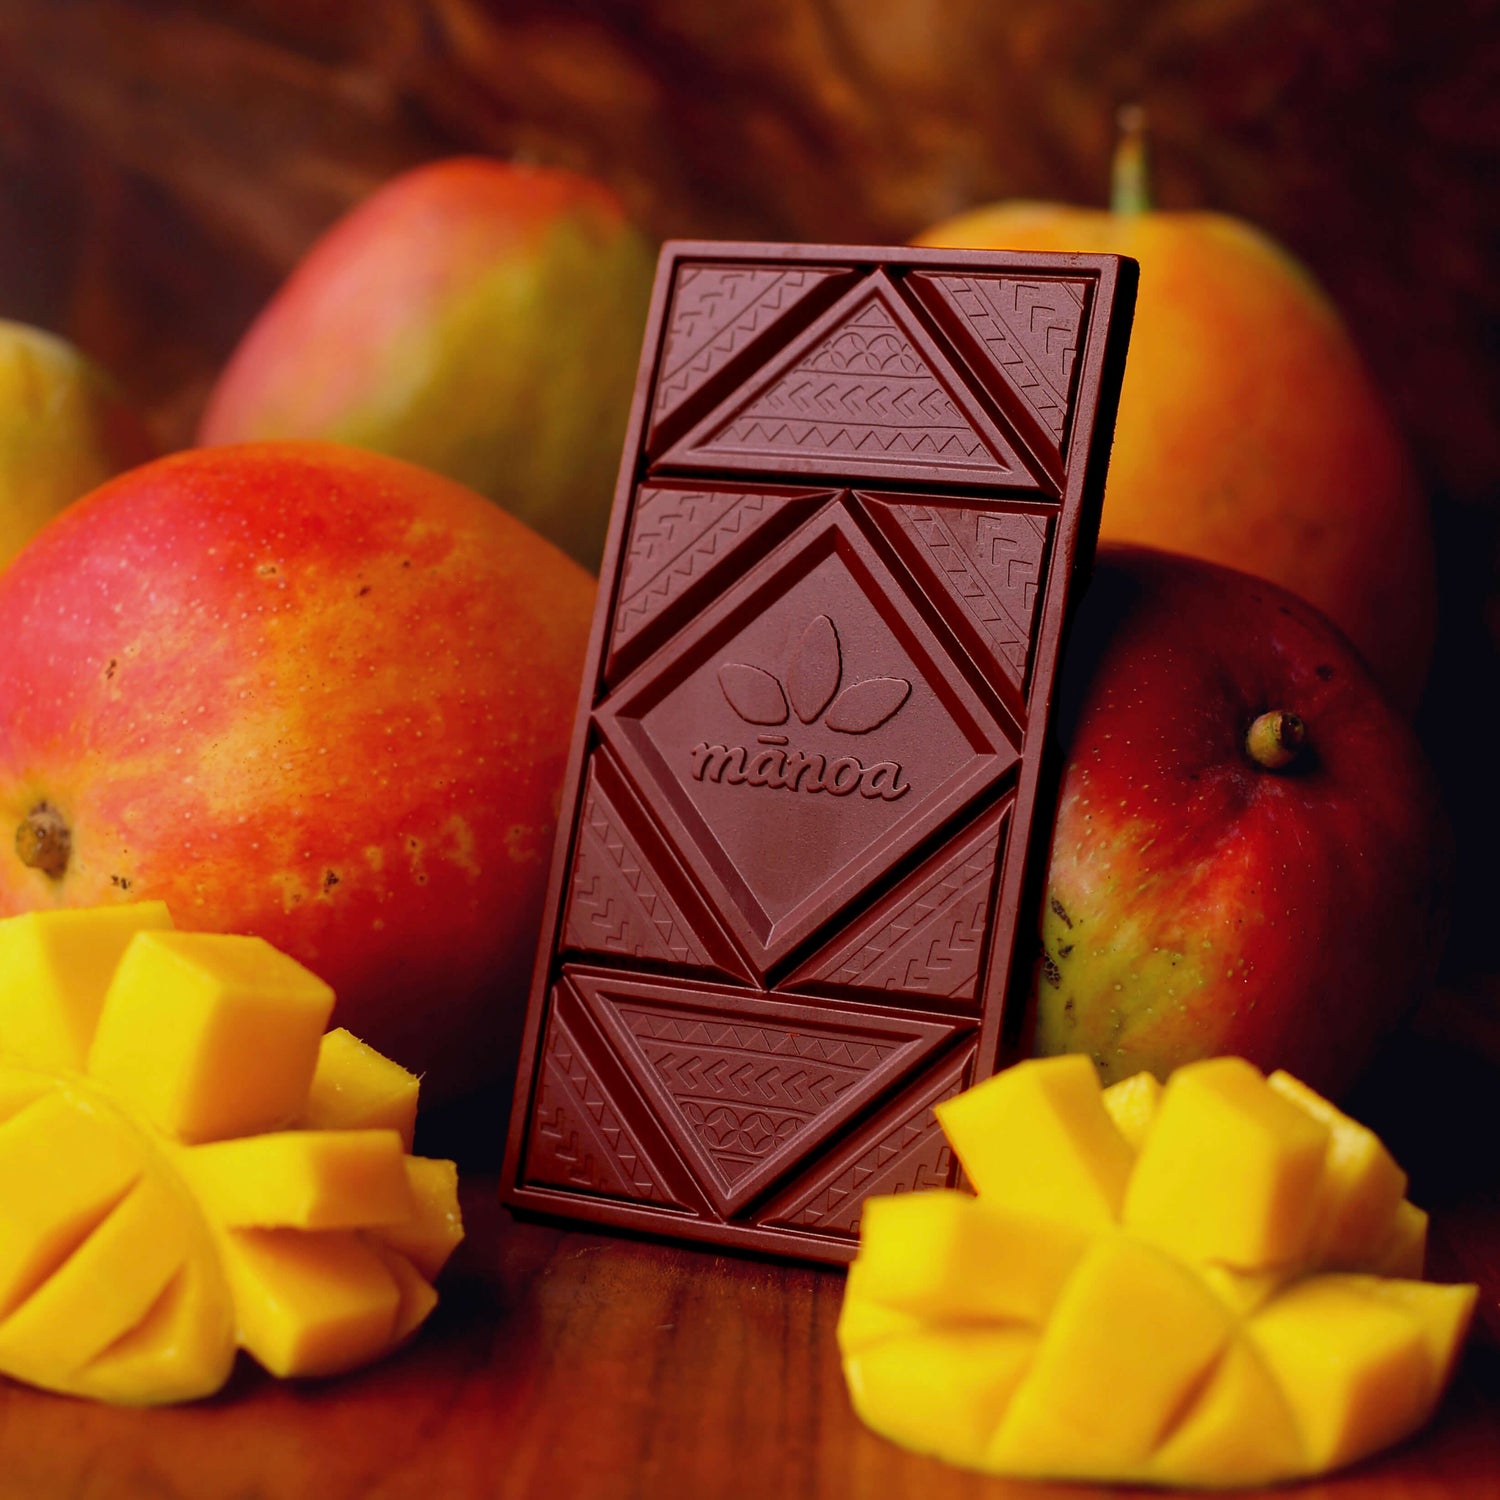 Image of chocolate bar sitting among mangos